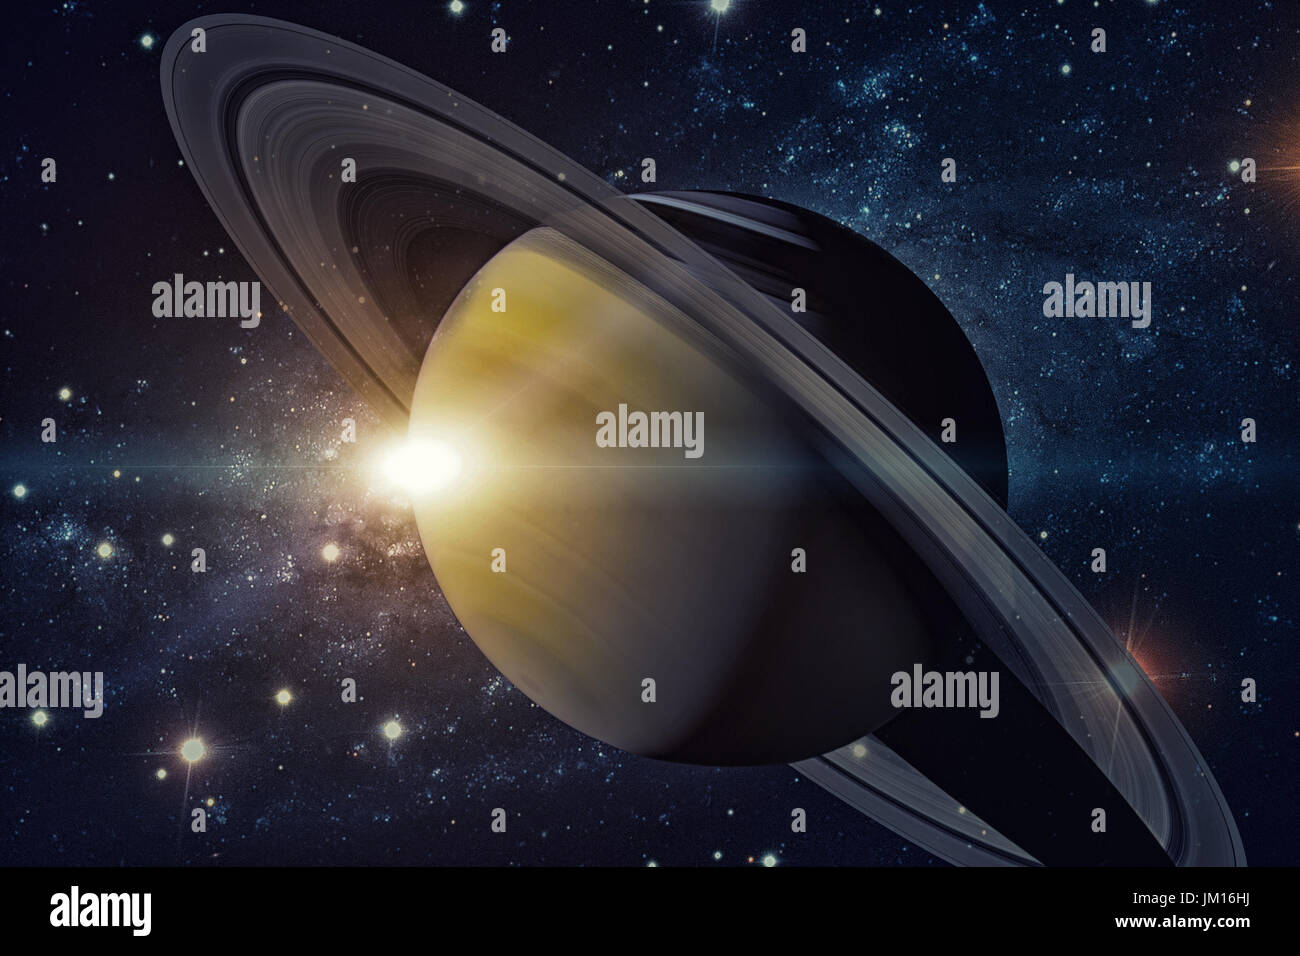 Journey Through the Solar System: Saturn